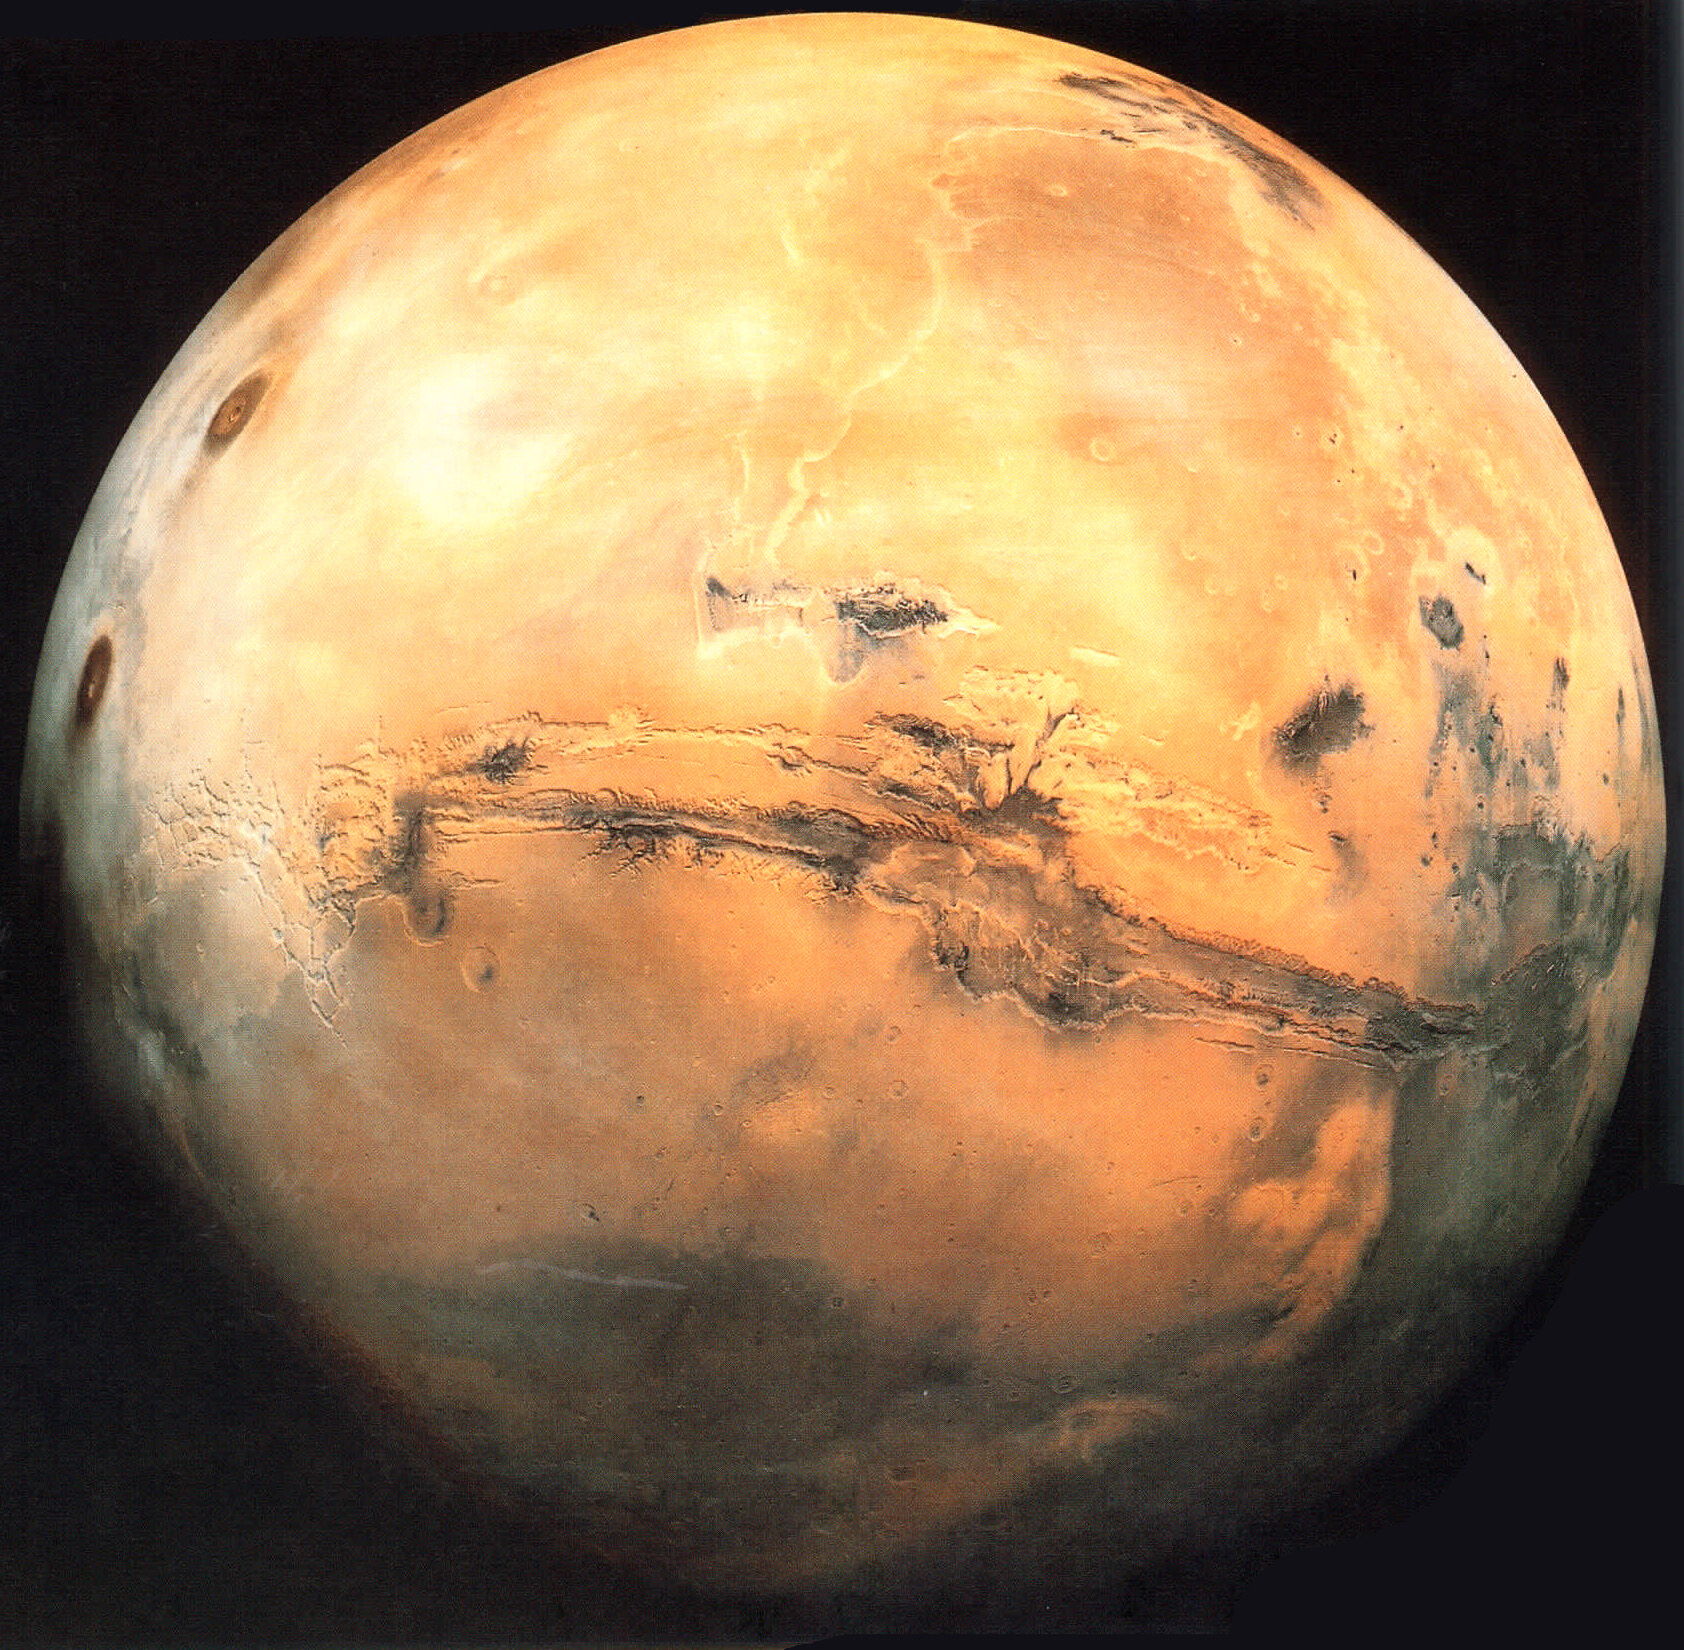 mars-the-red-planet-s-main-characteristics-in-short-bira-iasb